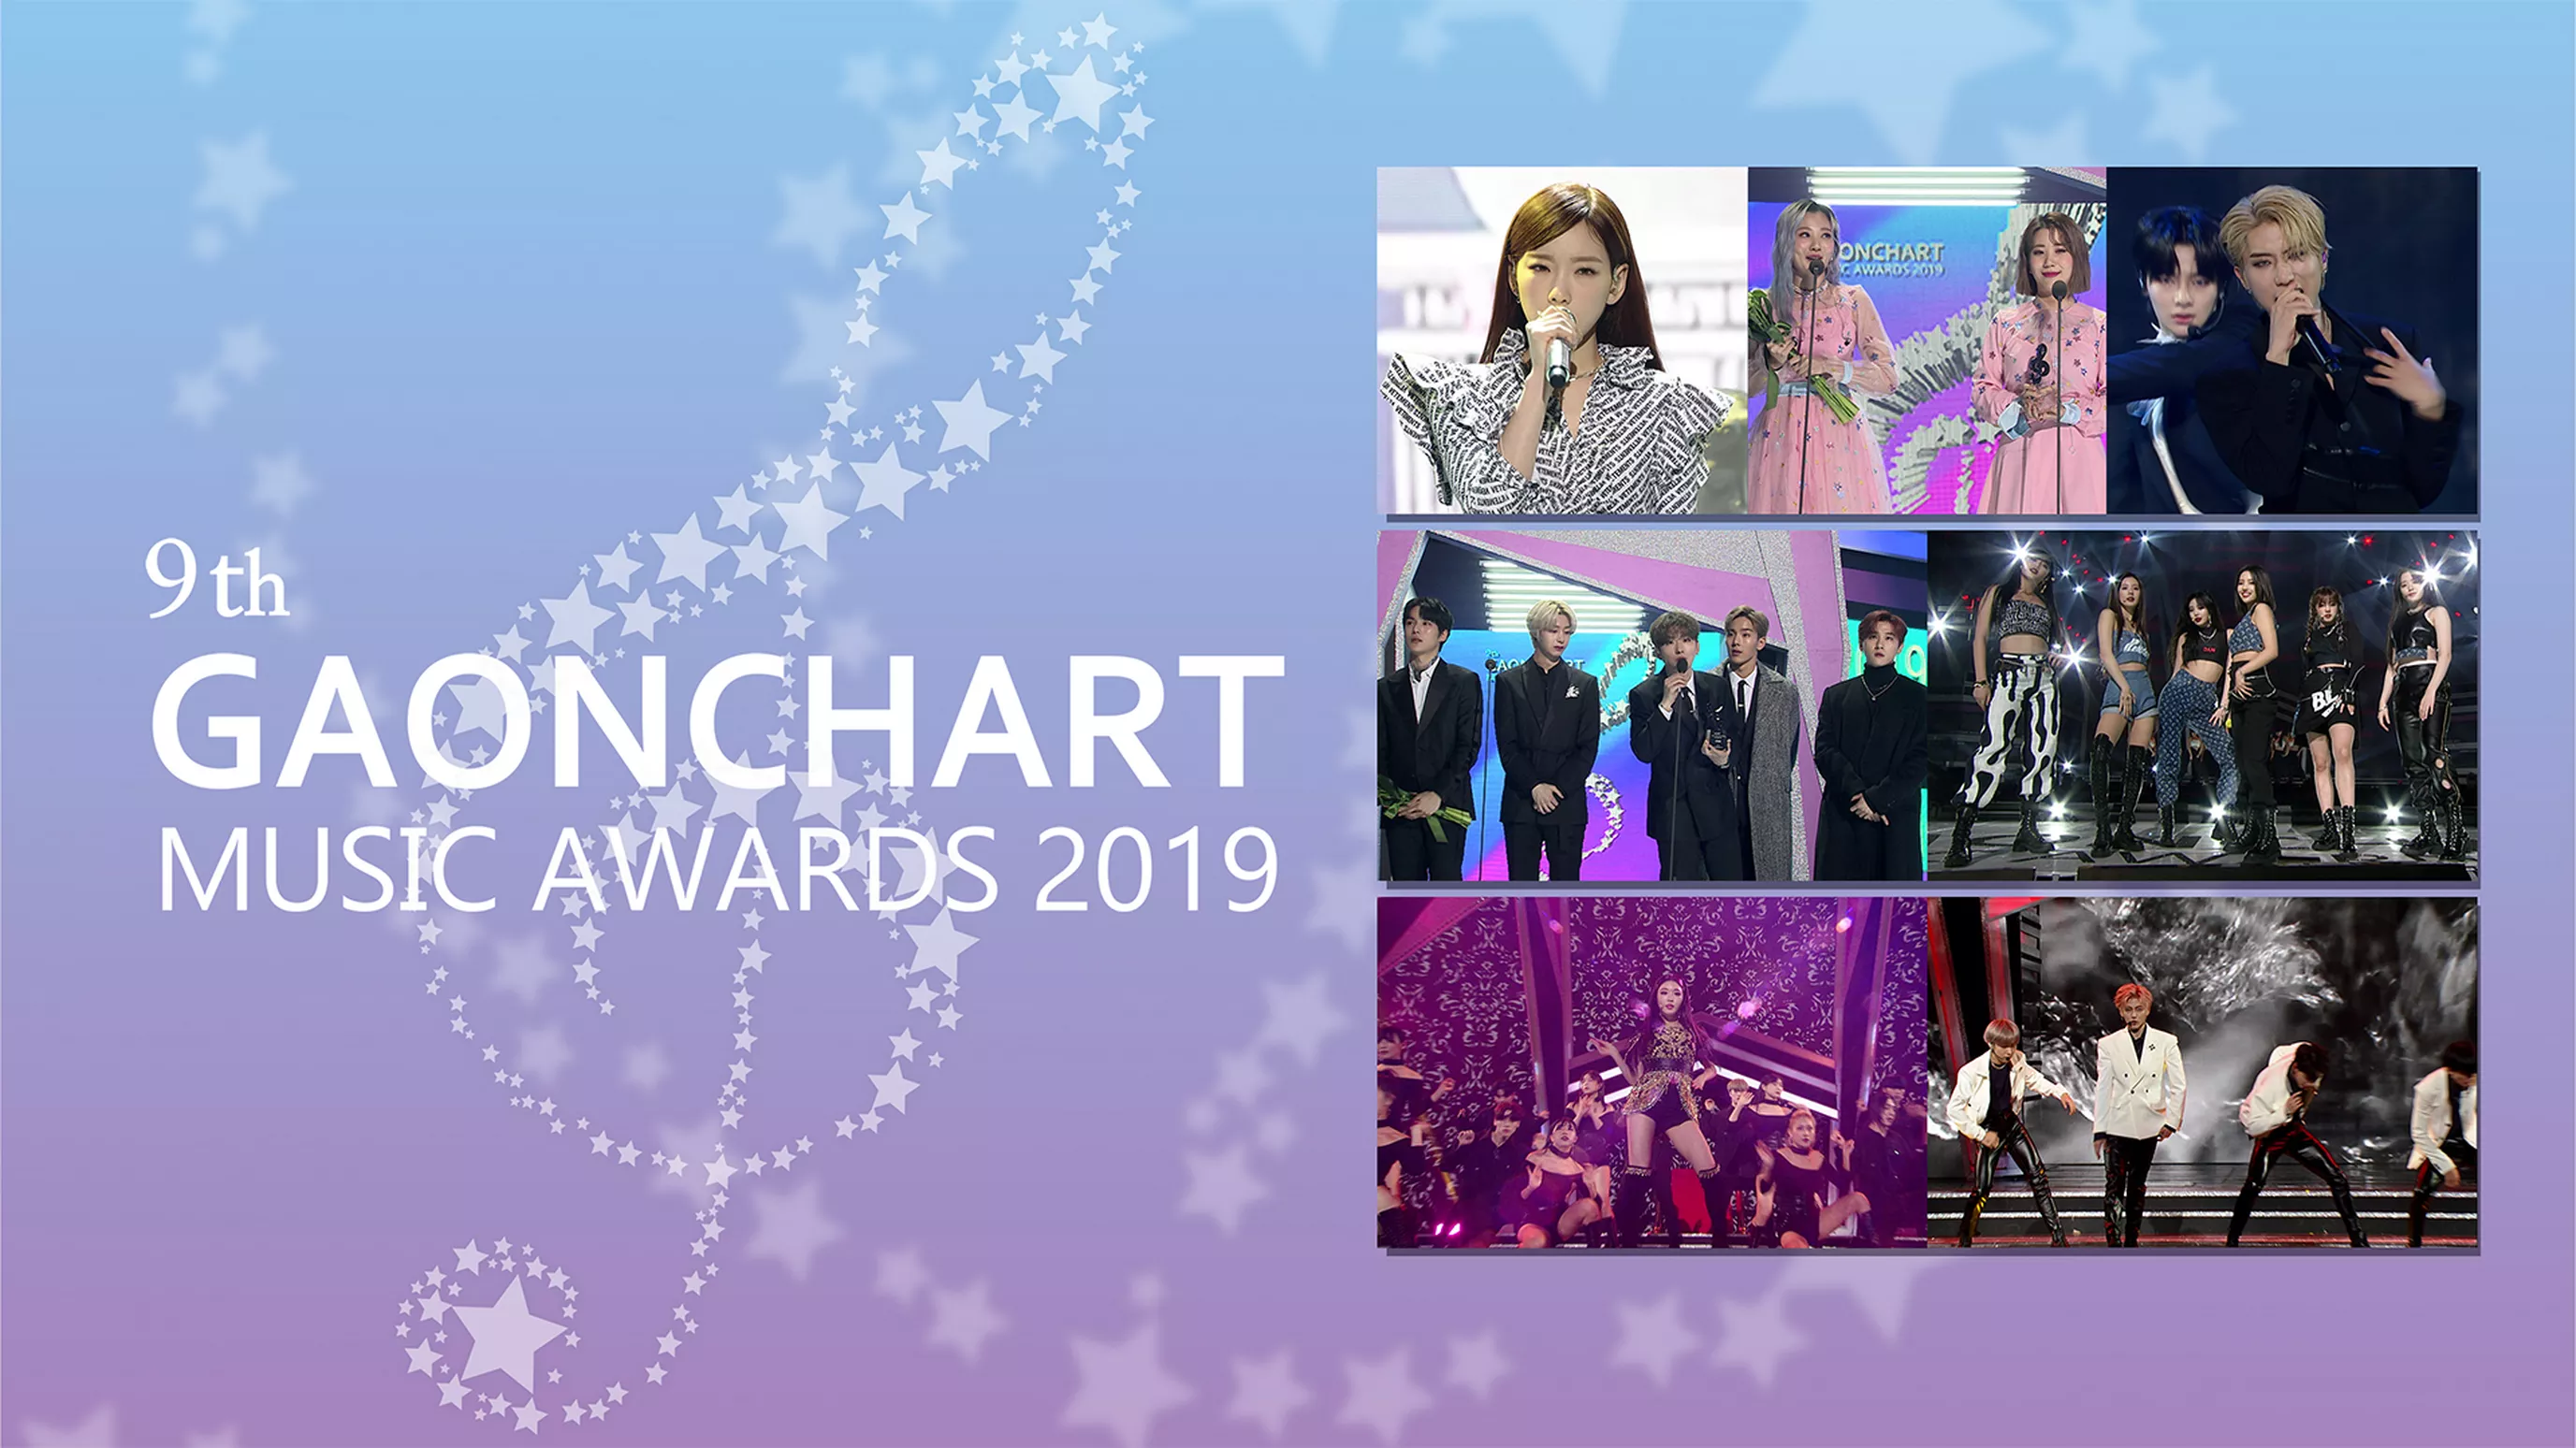 9th GAONCHART MUSIC AWARDS 2019